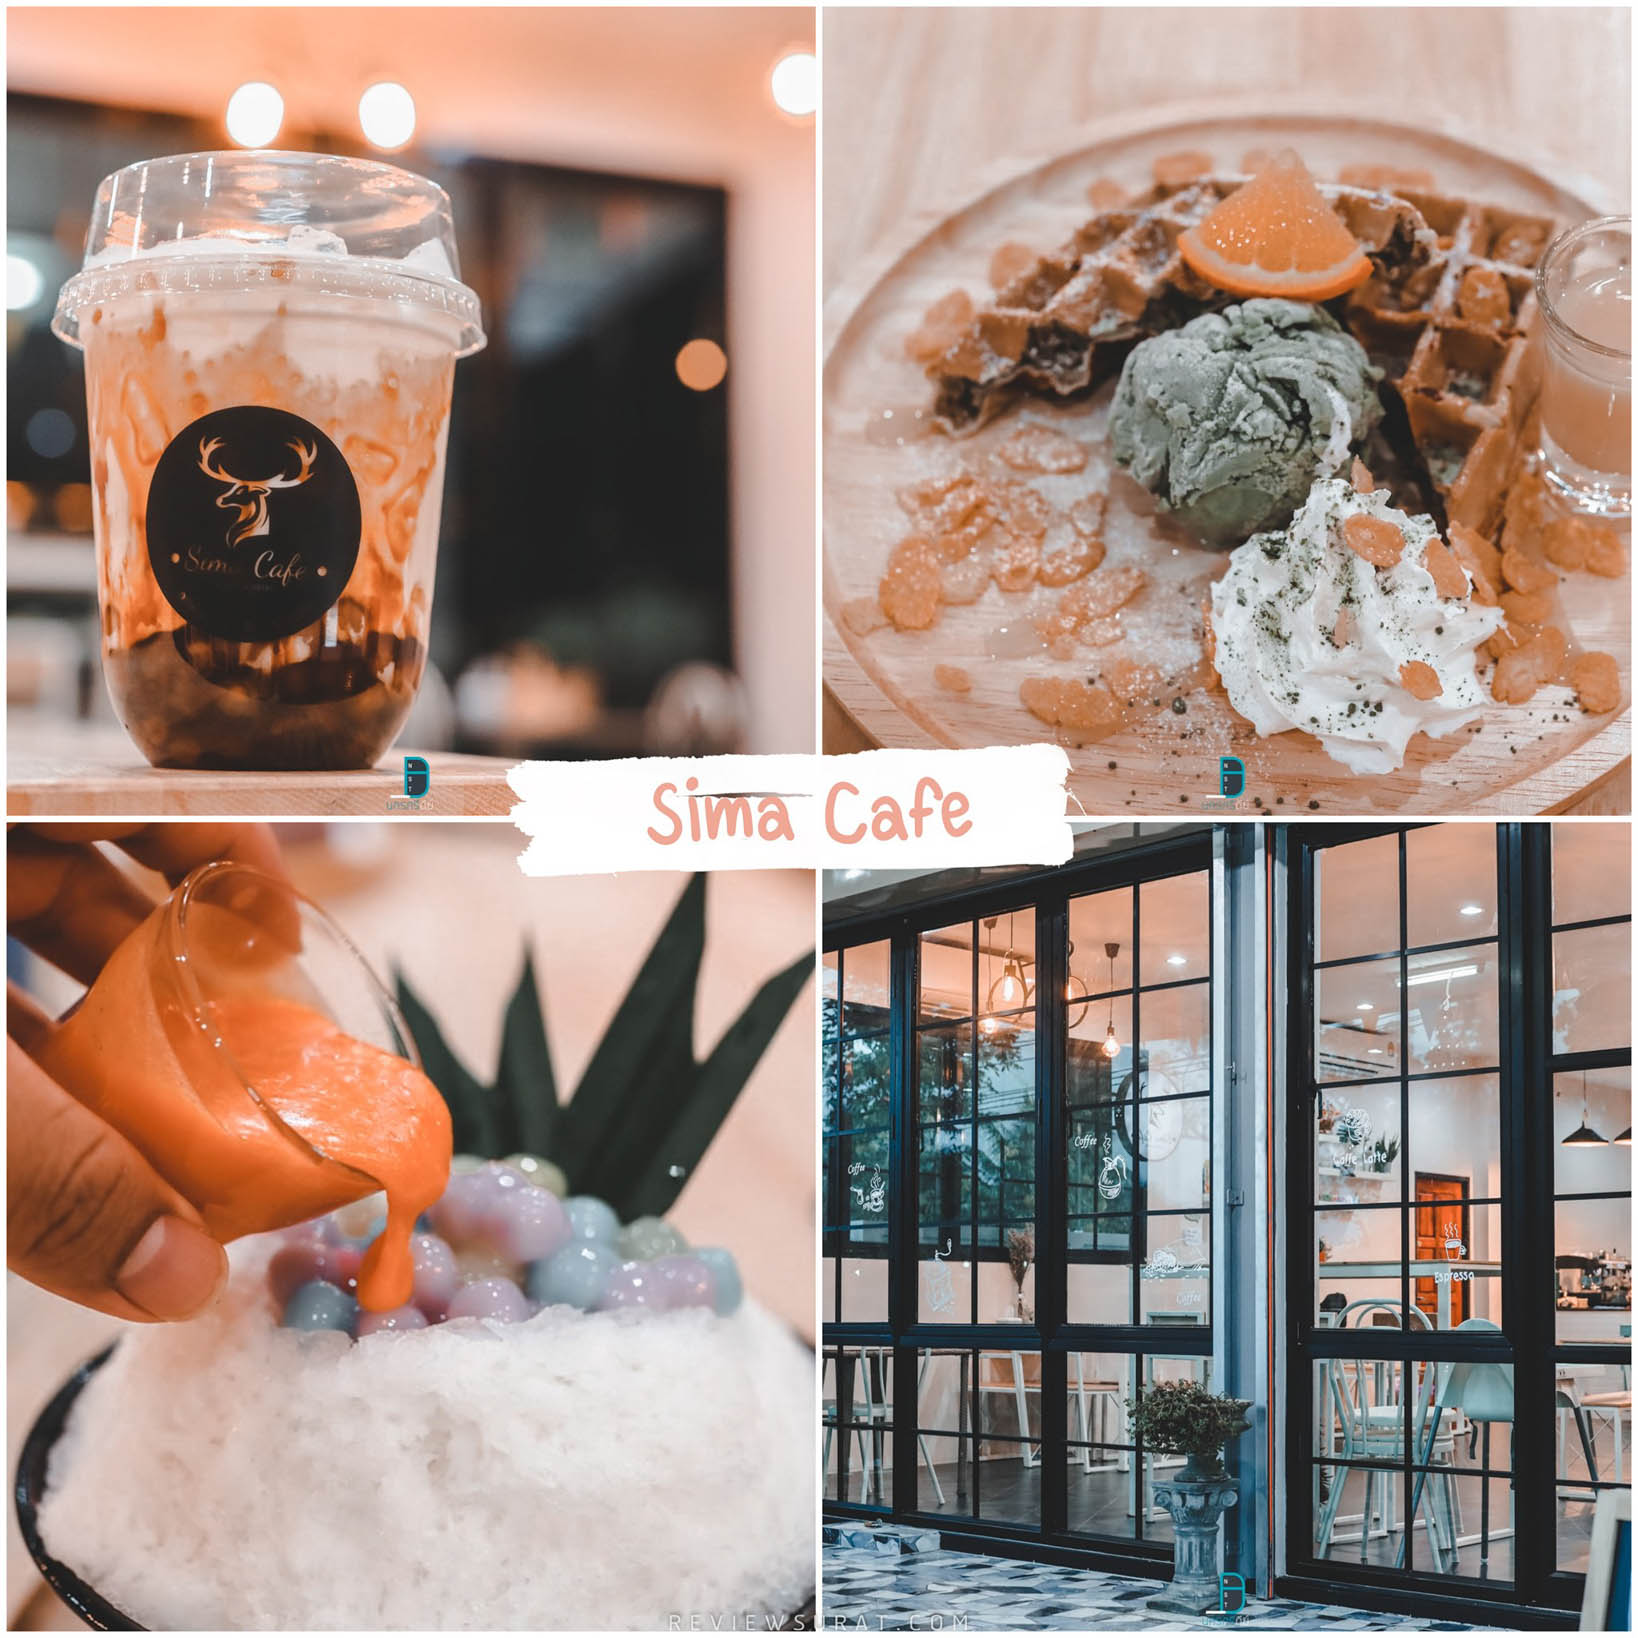 Sima-Cafe-ฉวาง -บอกเลยยืนหนึ่งในฉวาง-สวยชิววิวดี-ร้านลงทุนมวากก-อร่อยด้วยน้าา-ราคาไม่แพง- คาเฟ่,นครศรีธรรมราช,2021,จุดกิน,ของกิน,วิวหลักล้าน,ร้านกาแฟ